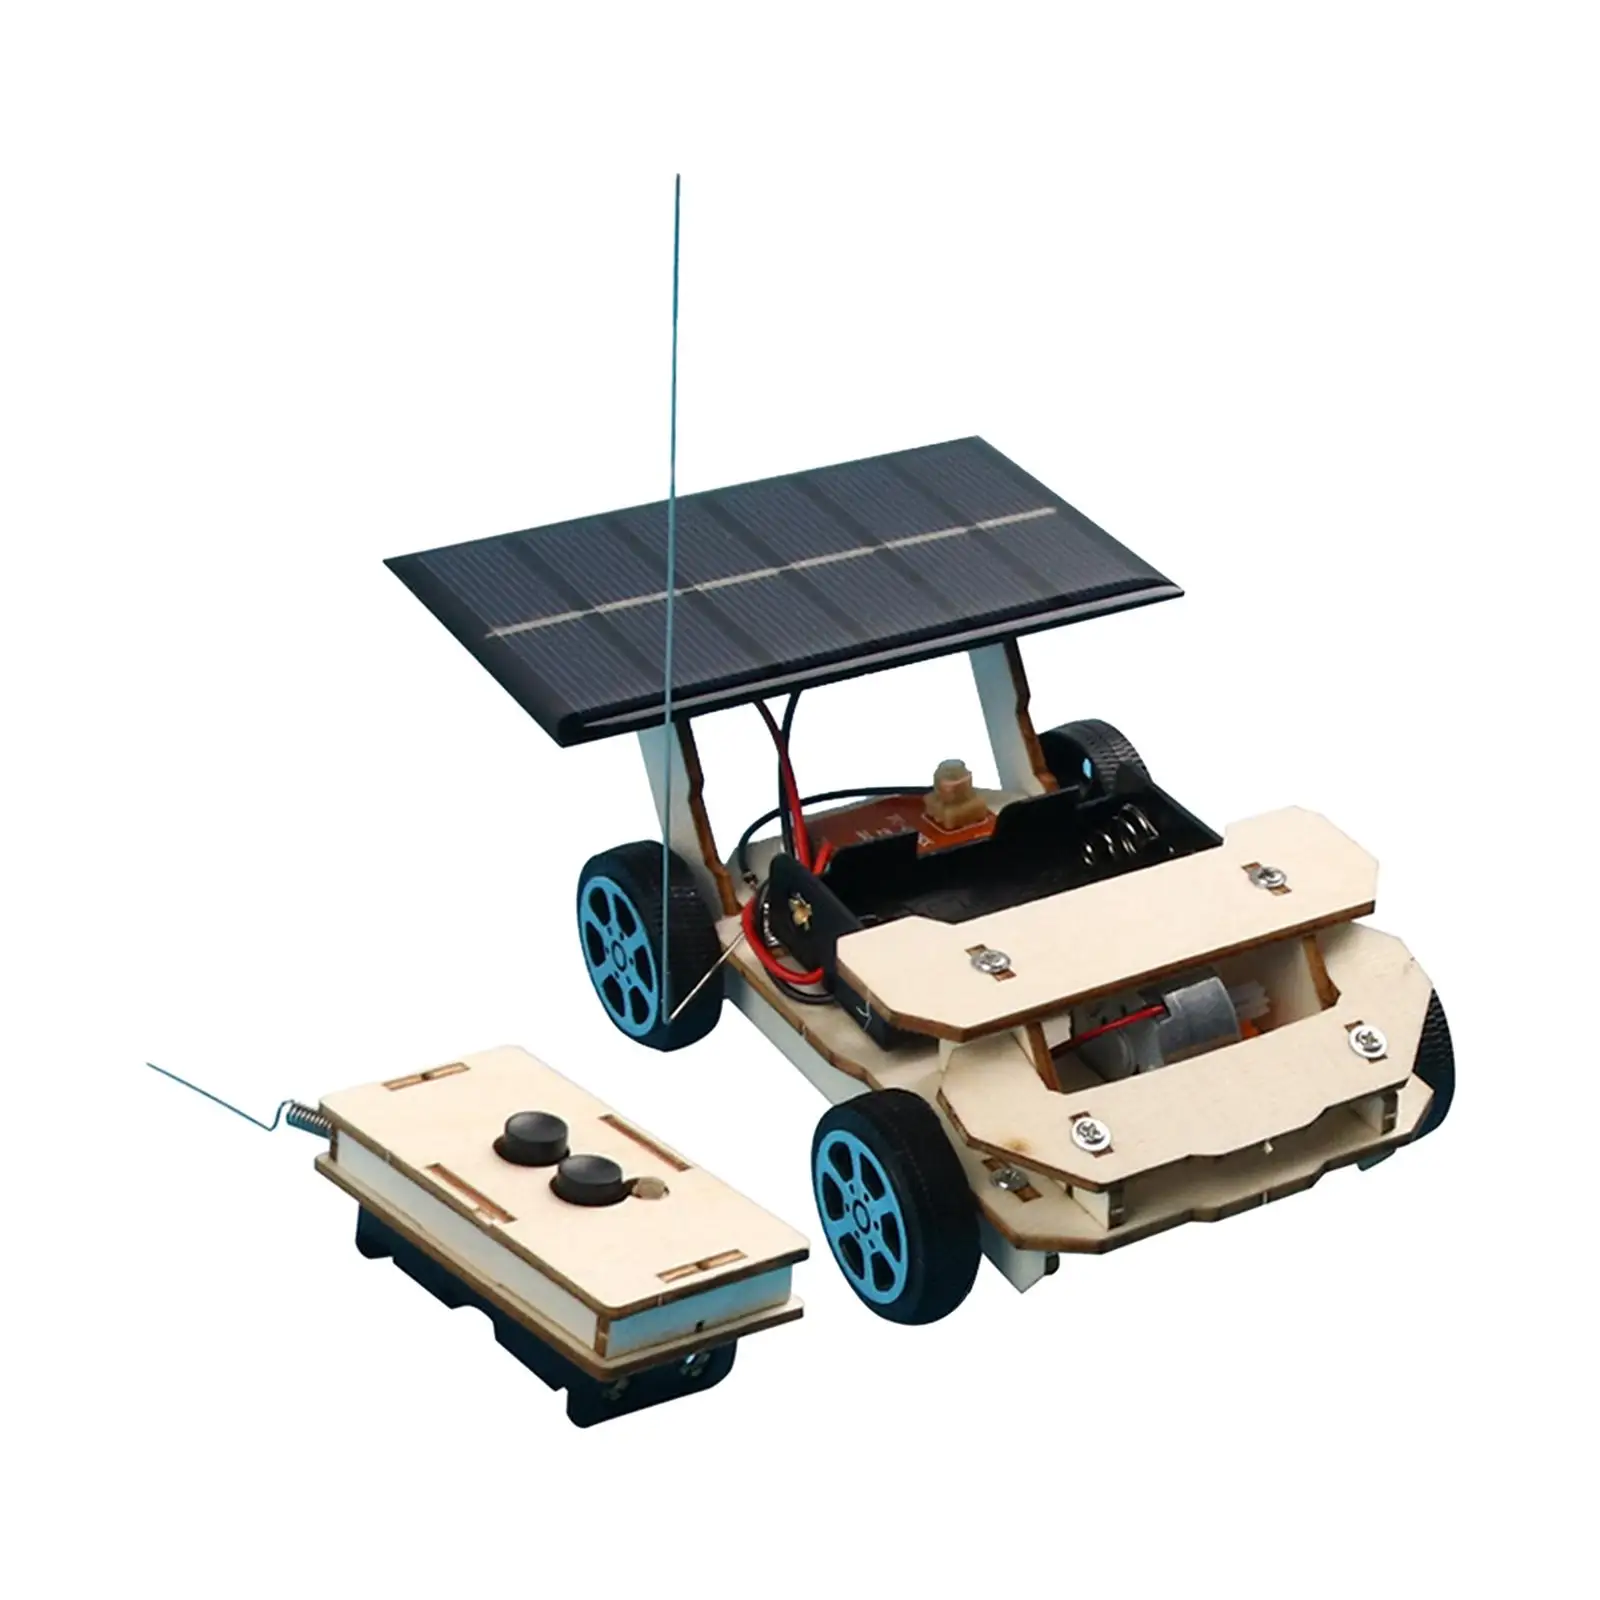 Wooden Solar Wireless Remote Control Car Model Kits for Children Age 8-12